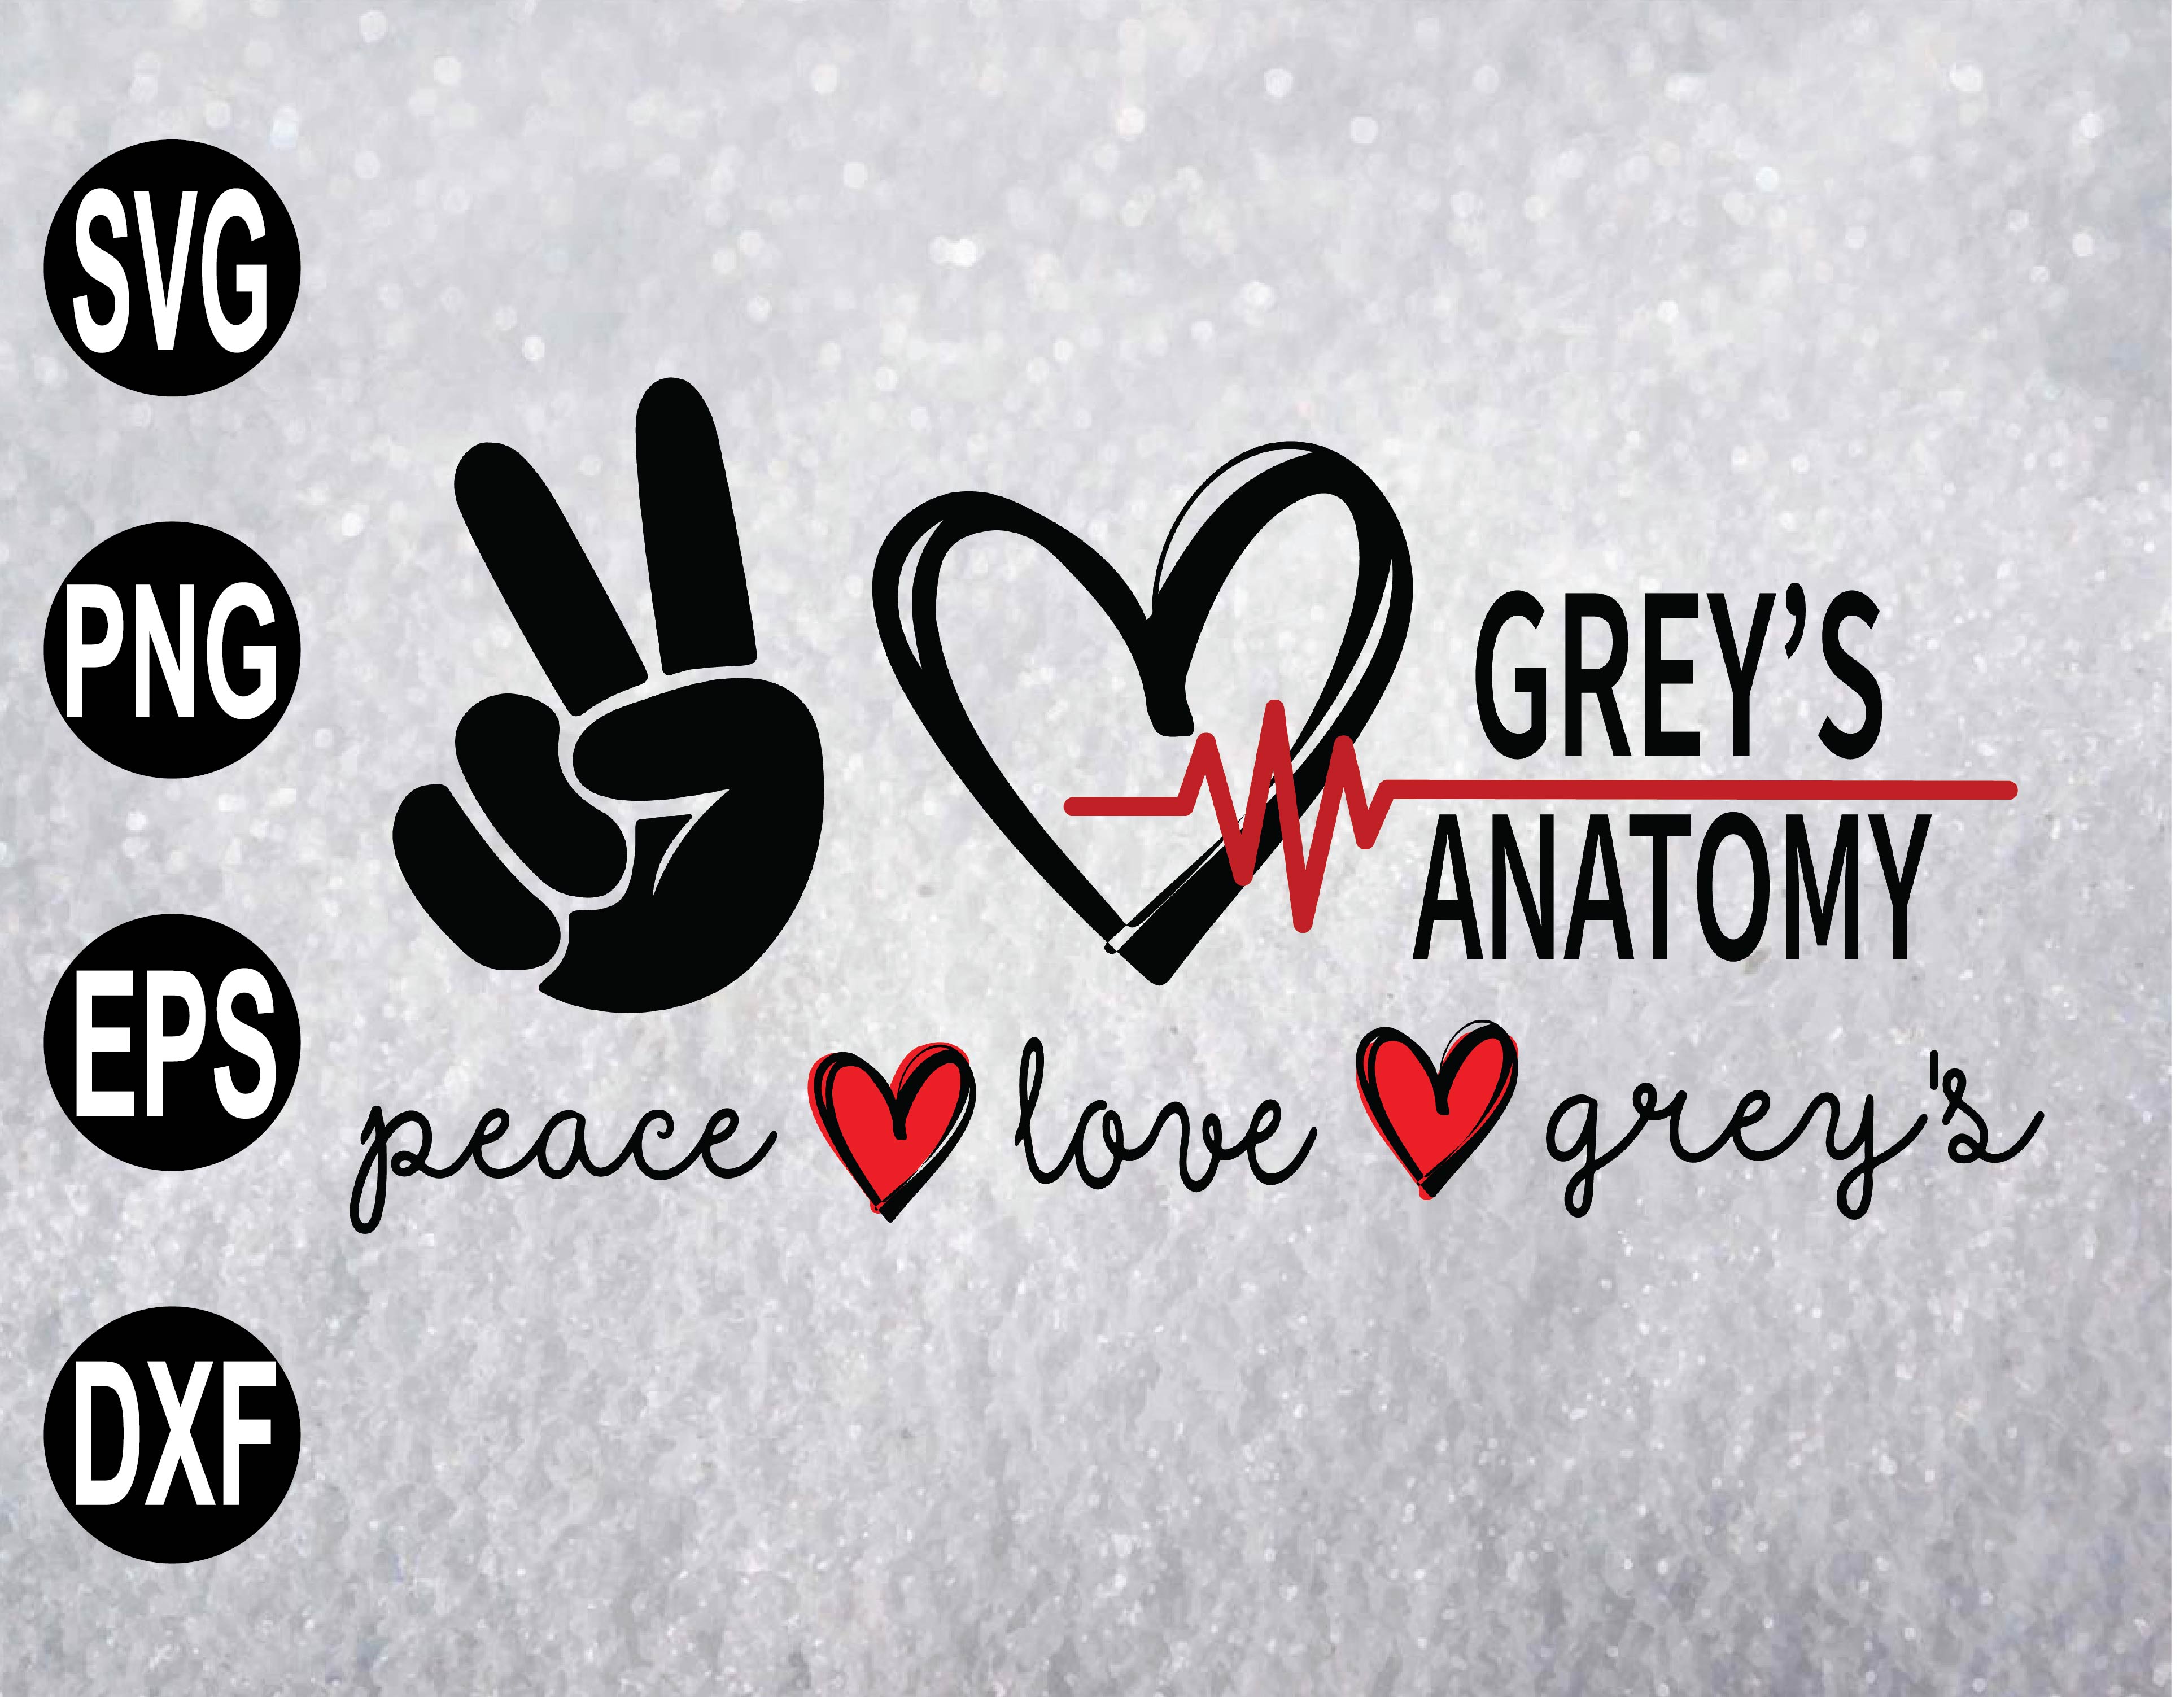 Download Peace Love Grey S Anatomy Svg Grey S Anatomy Svg Love Svg Peace Svg Peace Love Grey S Anatomy Digital Files Png Eps Dxf Designbtf Com